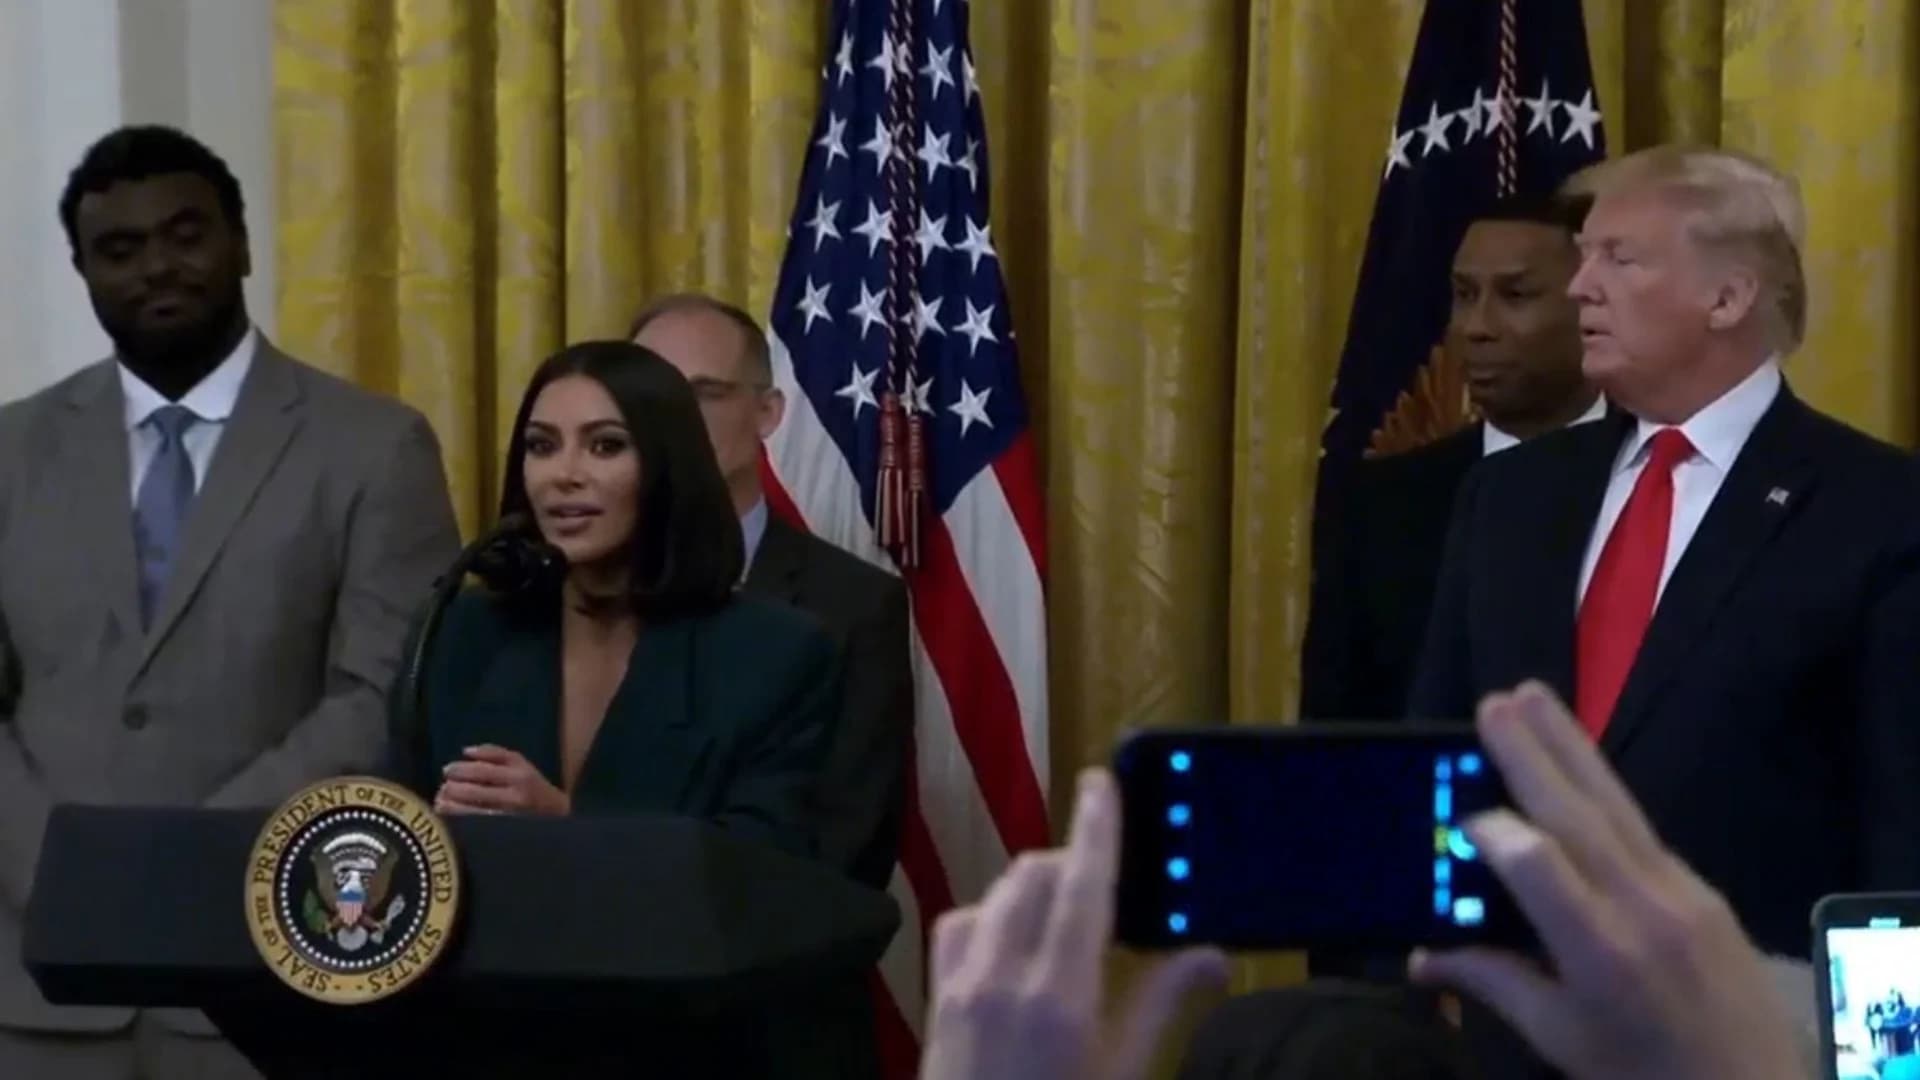 President Trump, Kim Kardashian talks prisoner re-entry at White House